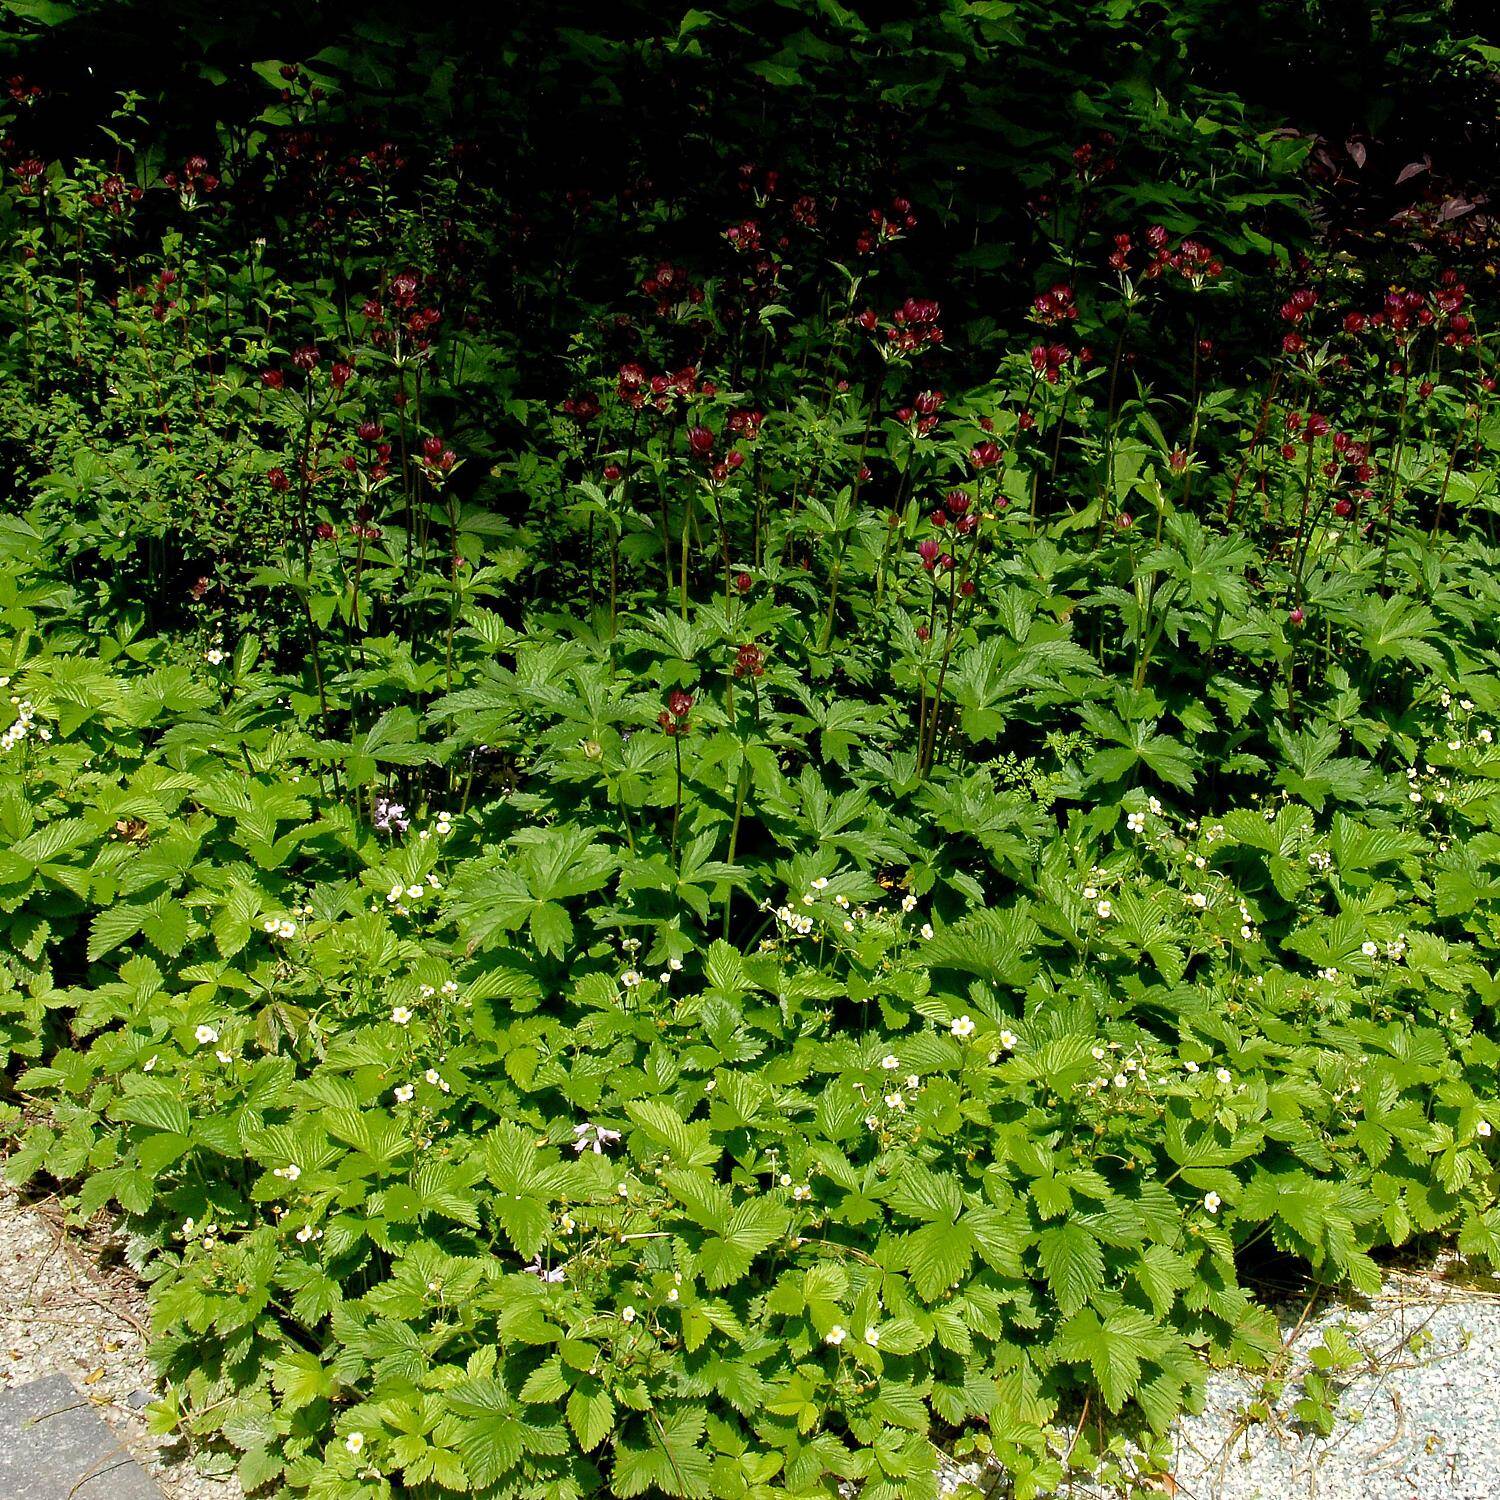  Wald Erdbeere - Fragaria vesca